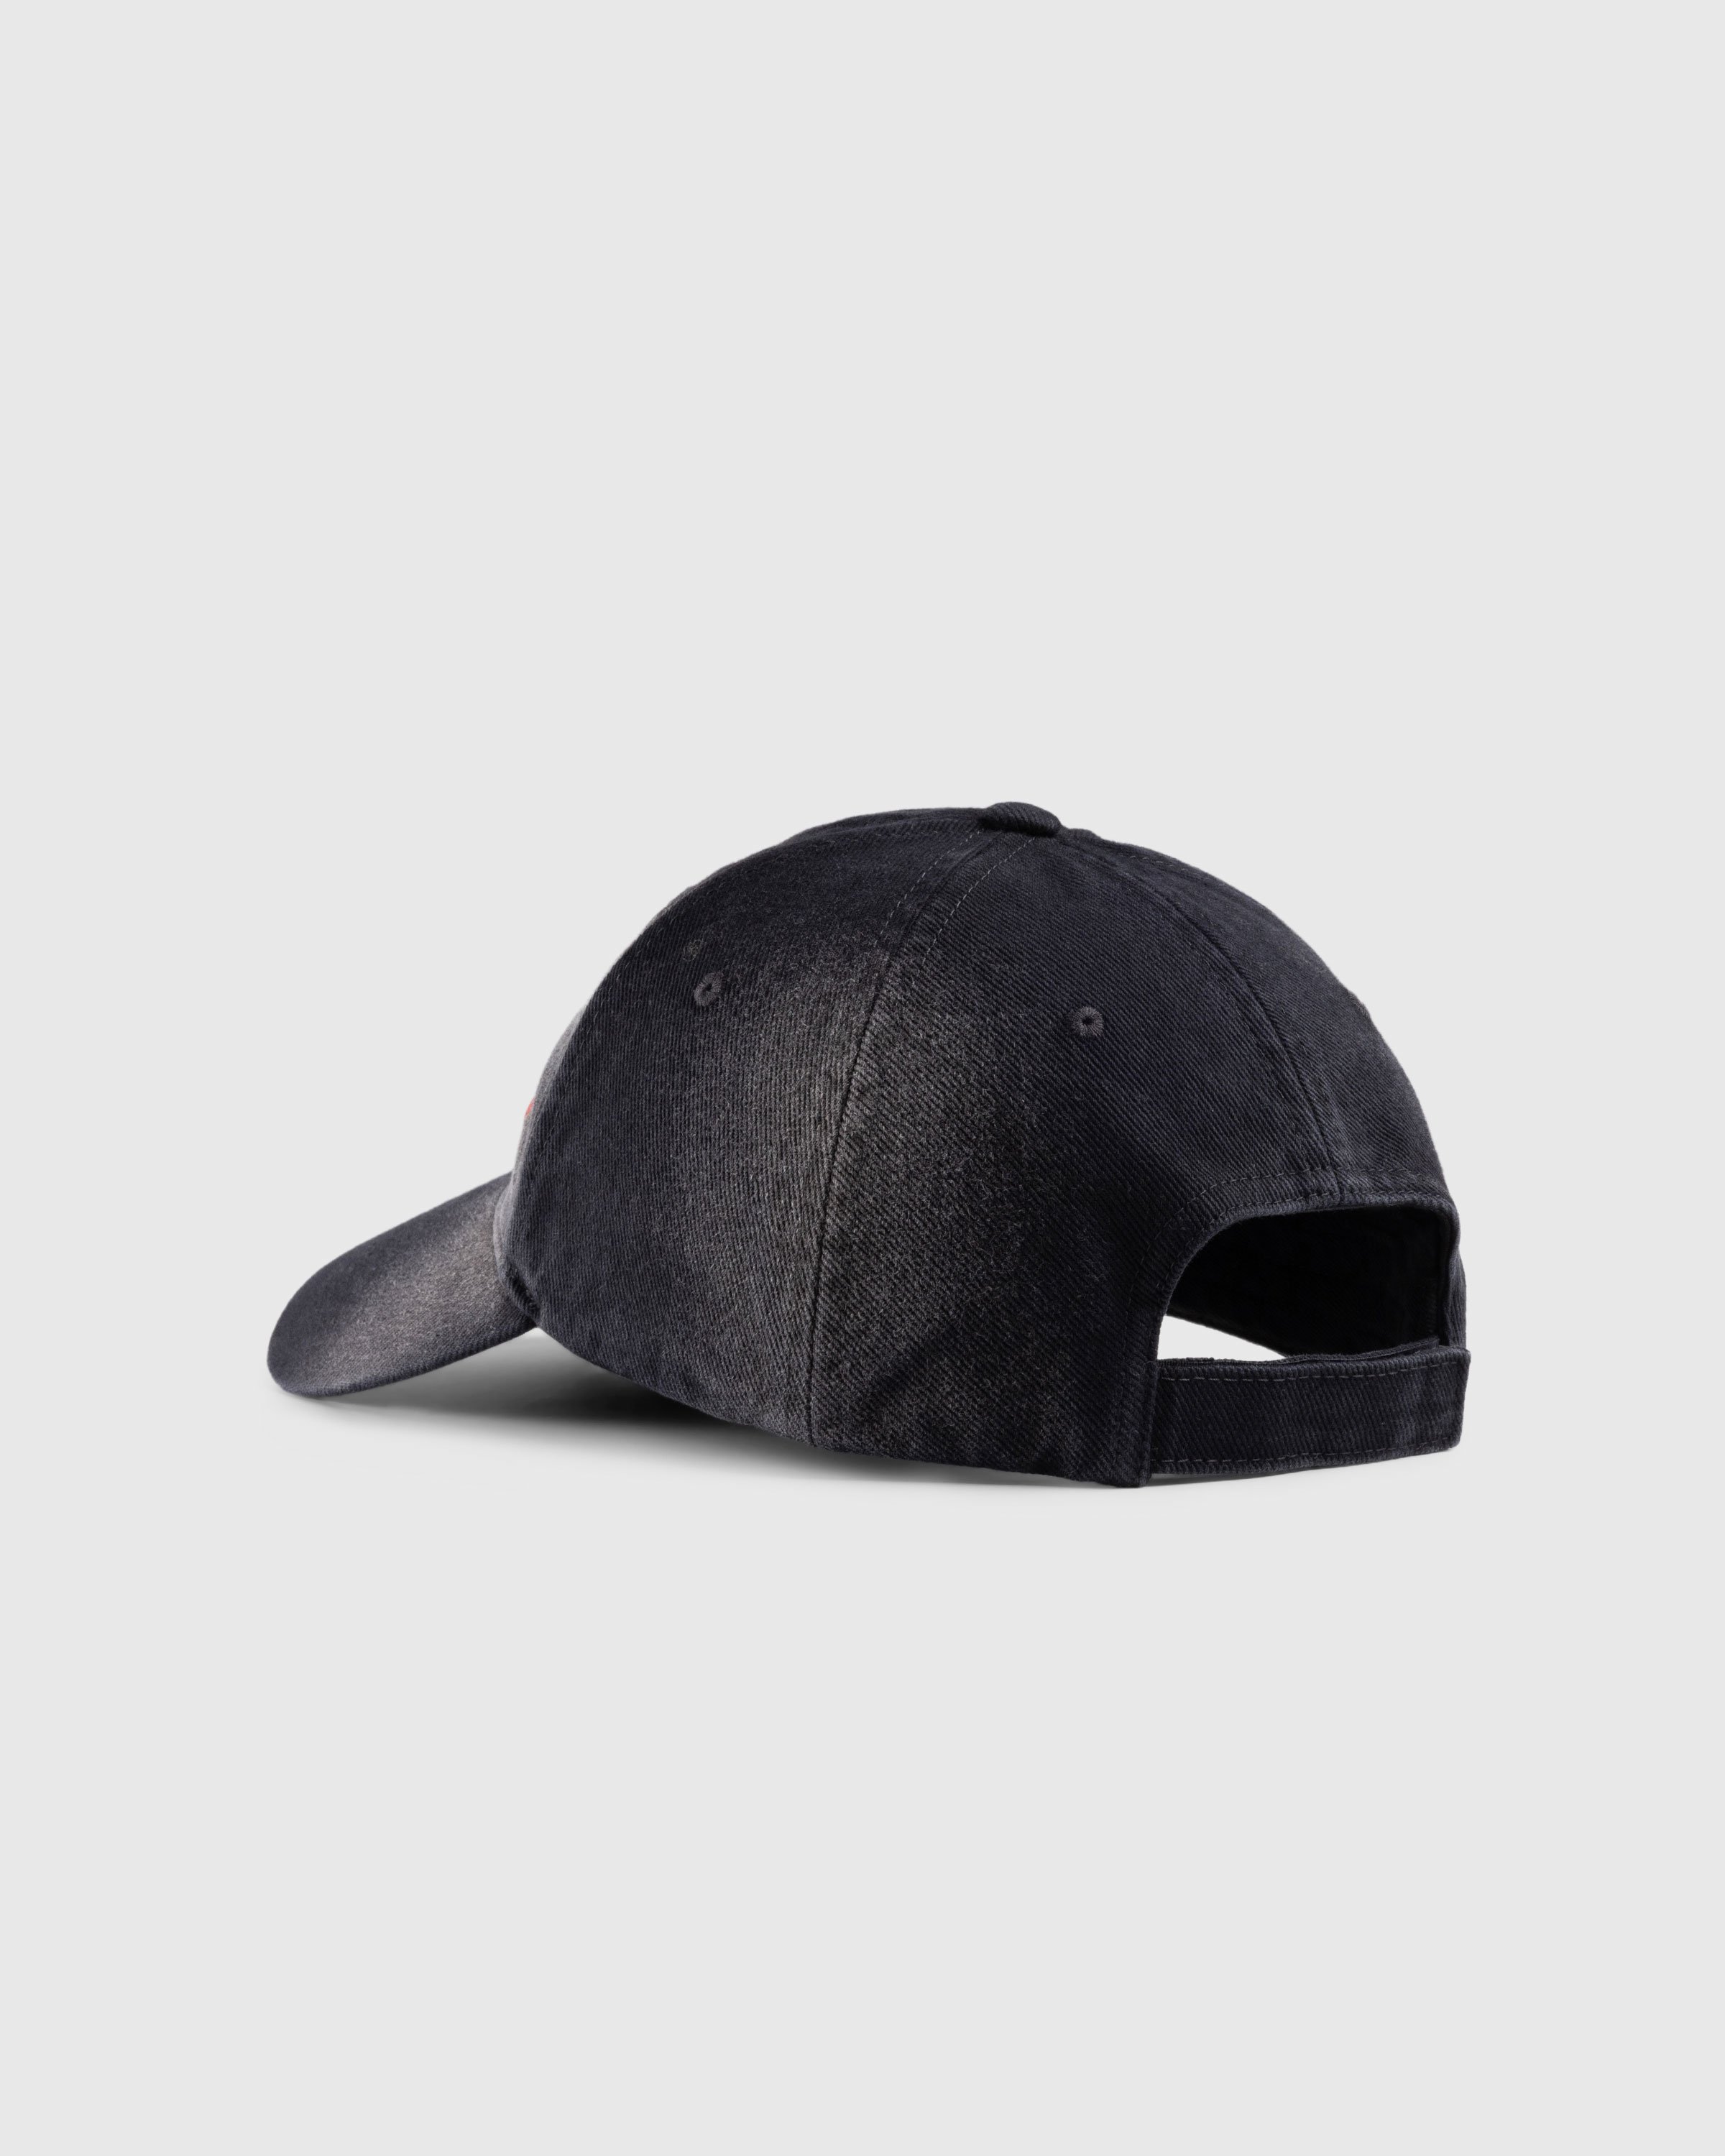 Marni - HAT - Accessories - Black - Image 3